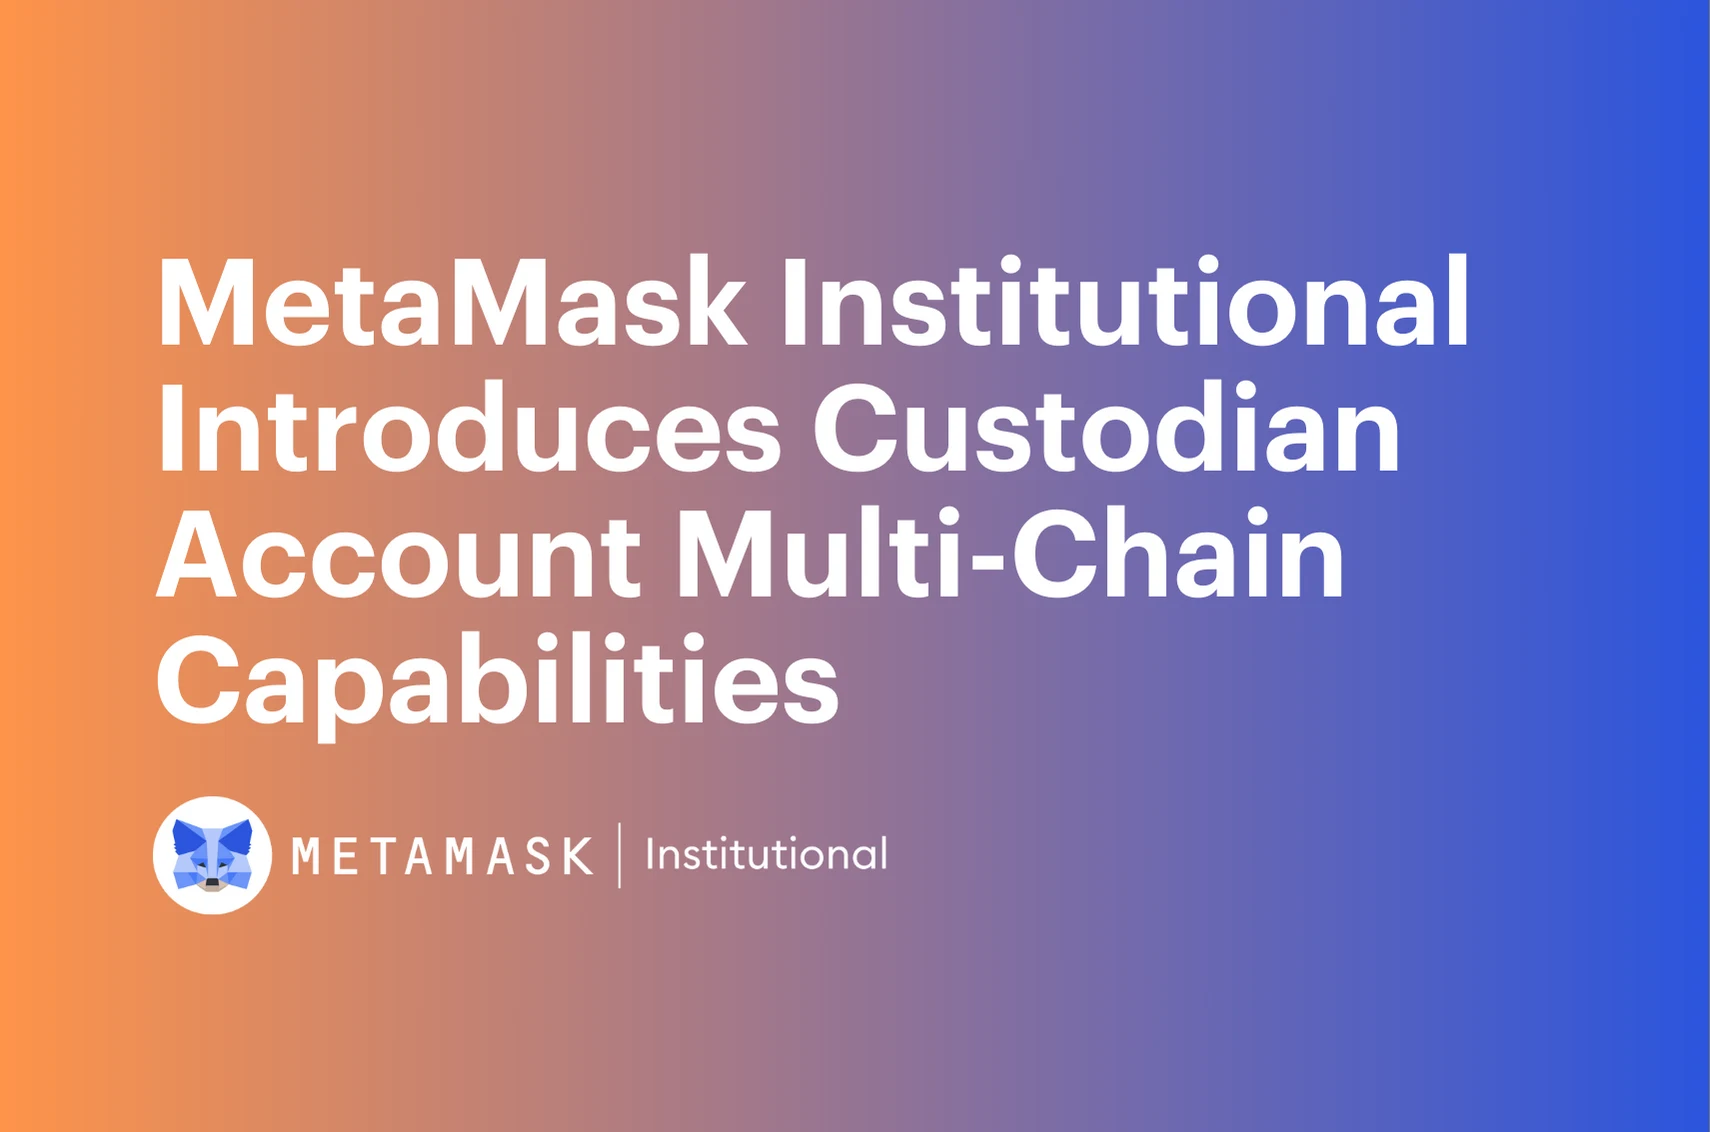 Image: MetaMask Institutional Introduces Custodian Account Multi-Chain Capabilities